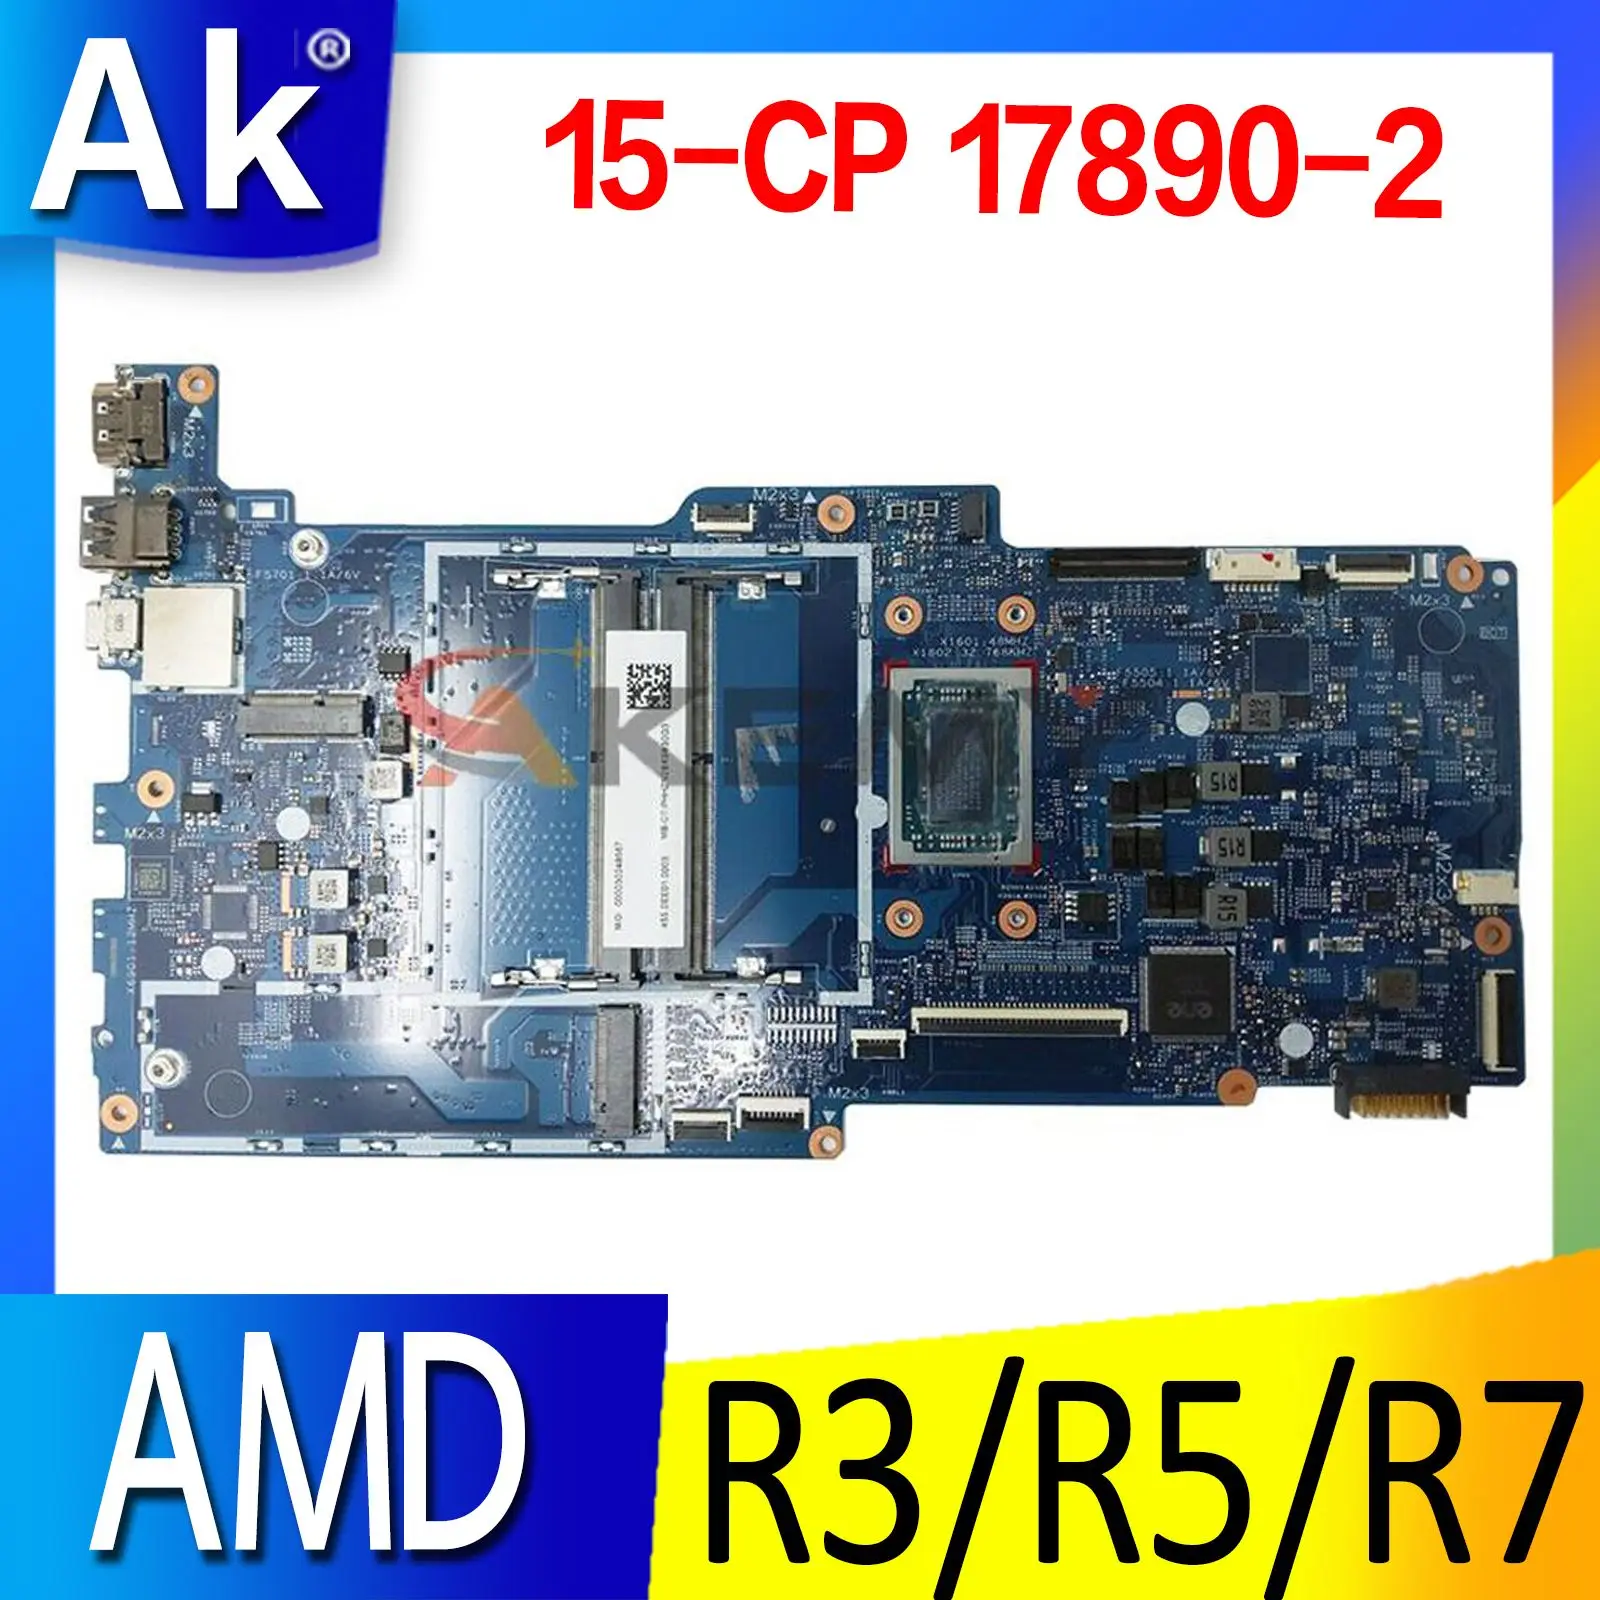 

17890-2 Motherboard with R3-2300U R5-2500U R7-2700U AMD CPU UMA For HP ENVY X360 15-CP 15Z-CP Laptop Motherboard Mainboard